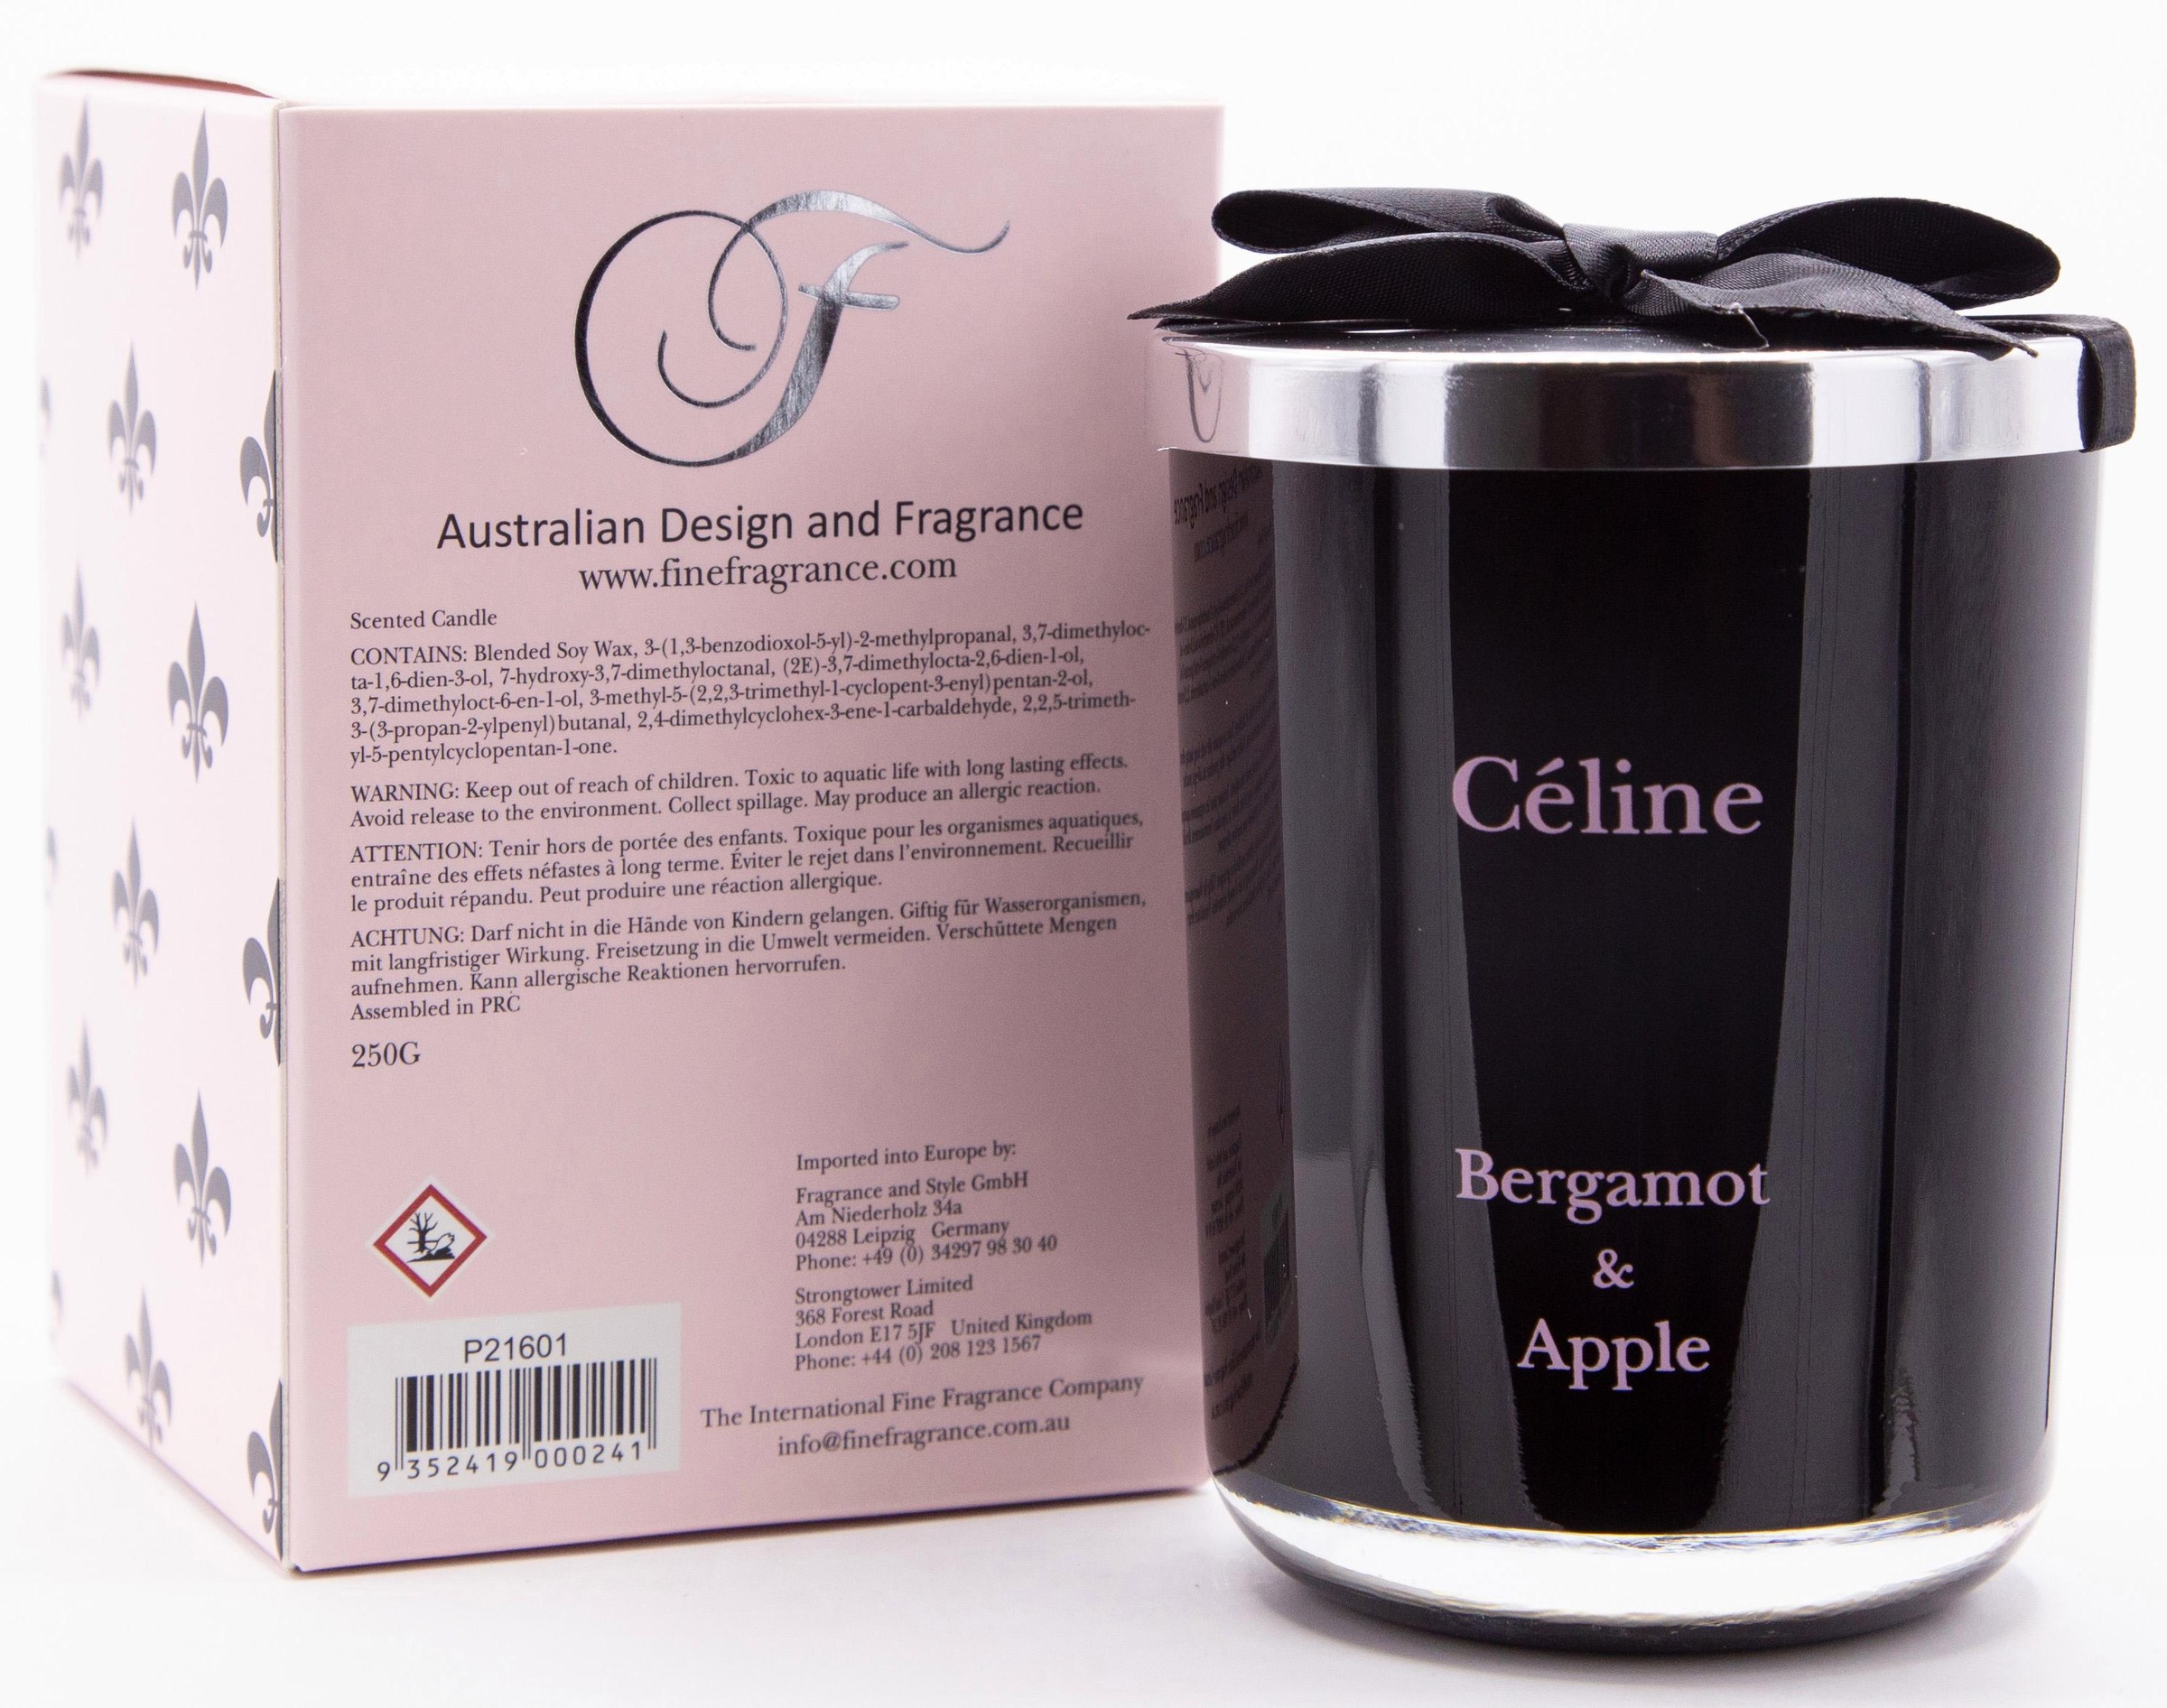 Fine Fragrance Company Duftkerze »Paris-Chic - Celine«